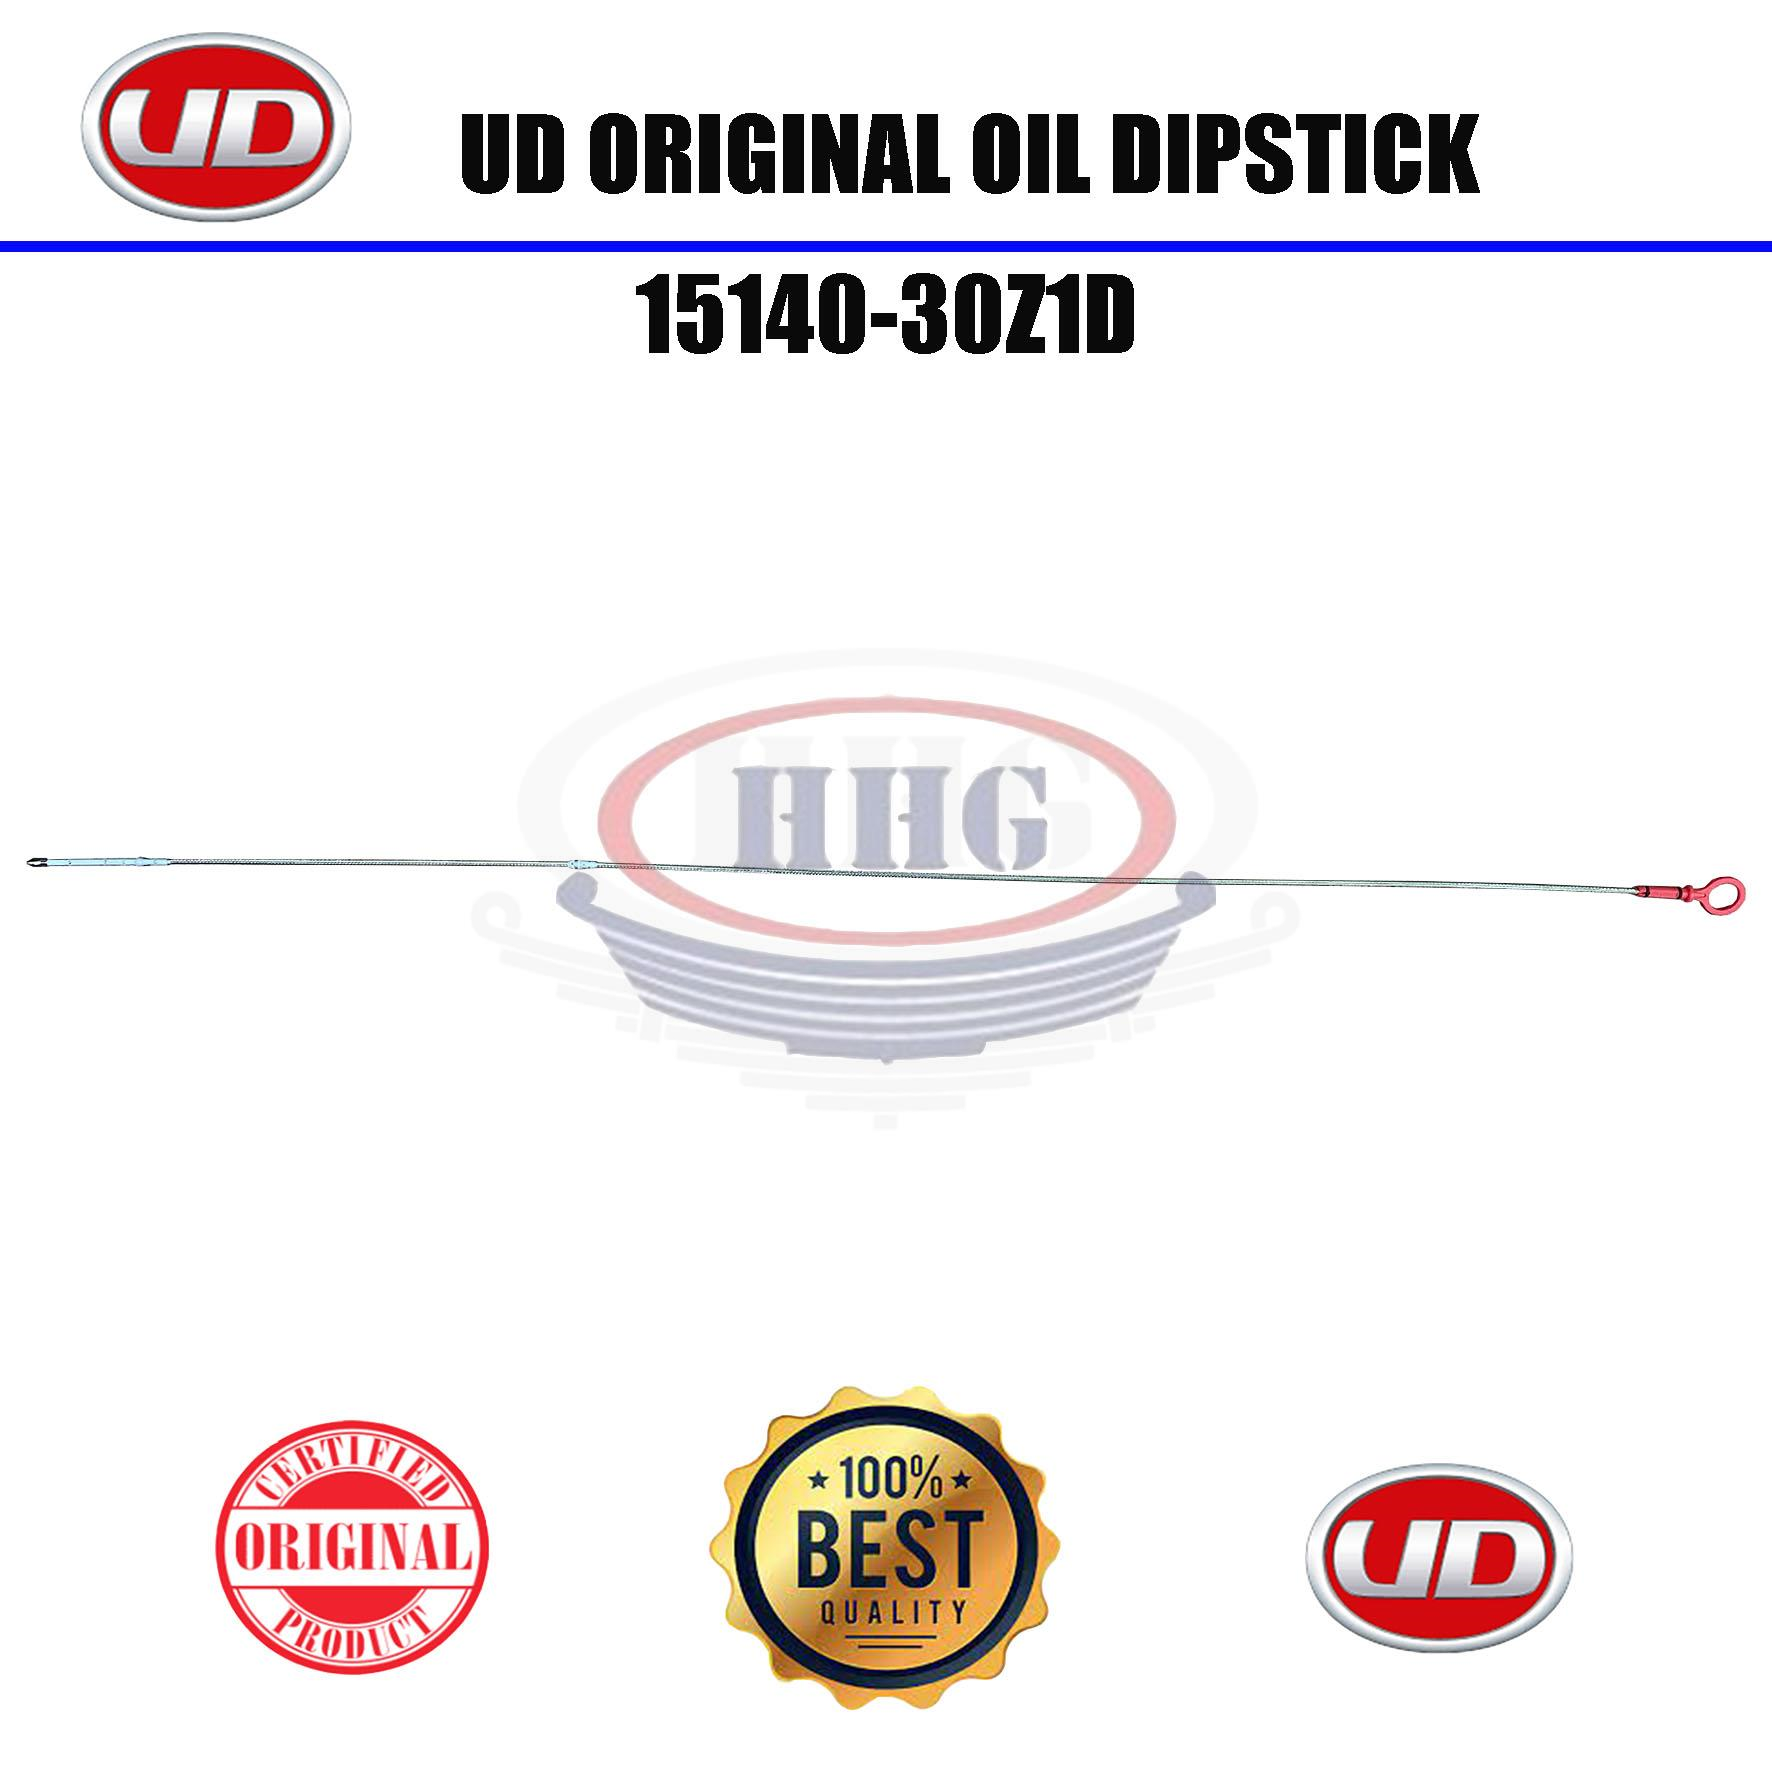 UD Original MK38 GH5T Oil Dipstick (15140-30Z1D)